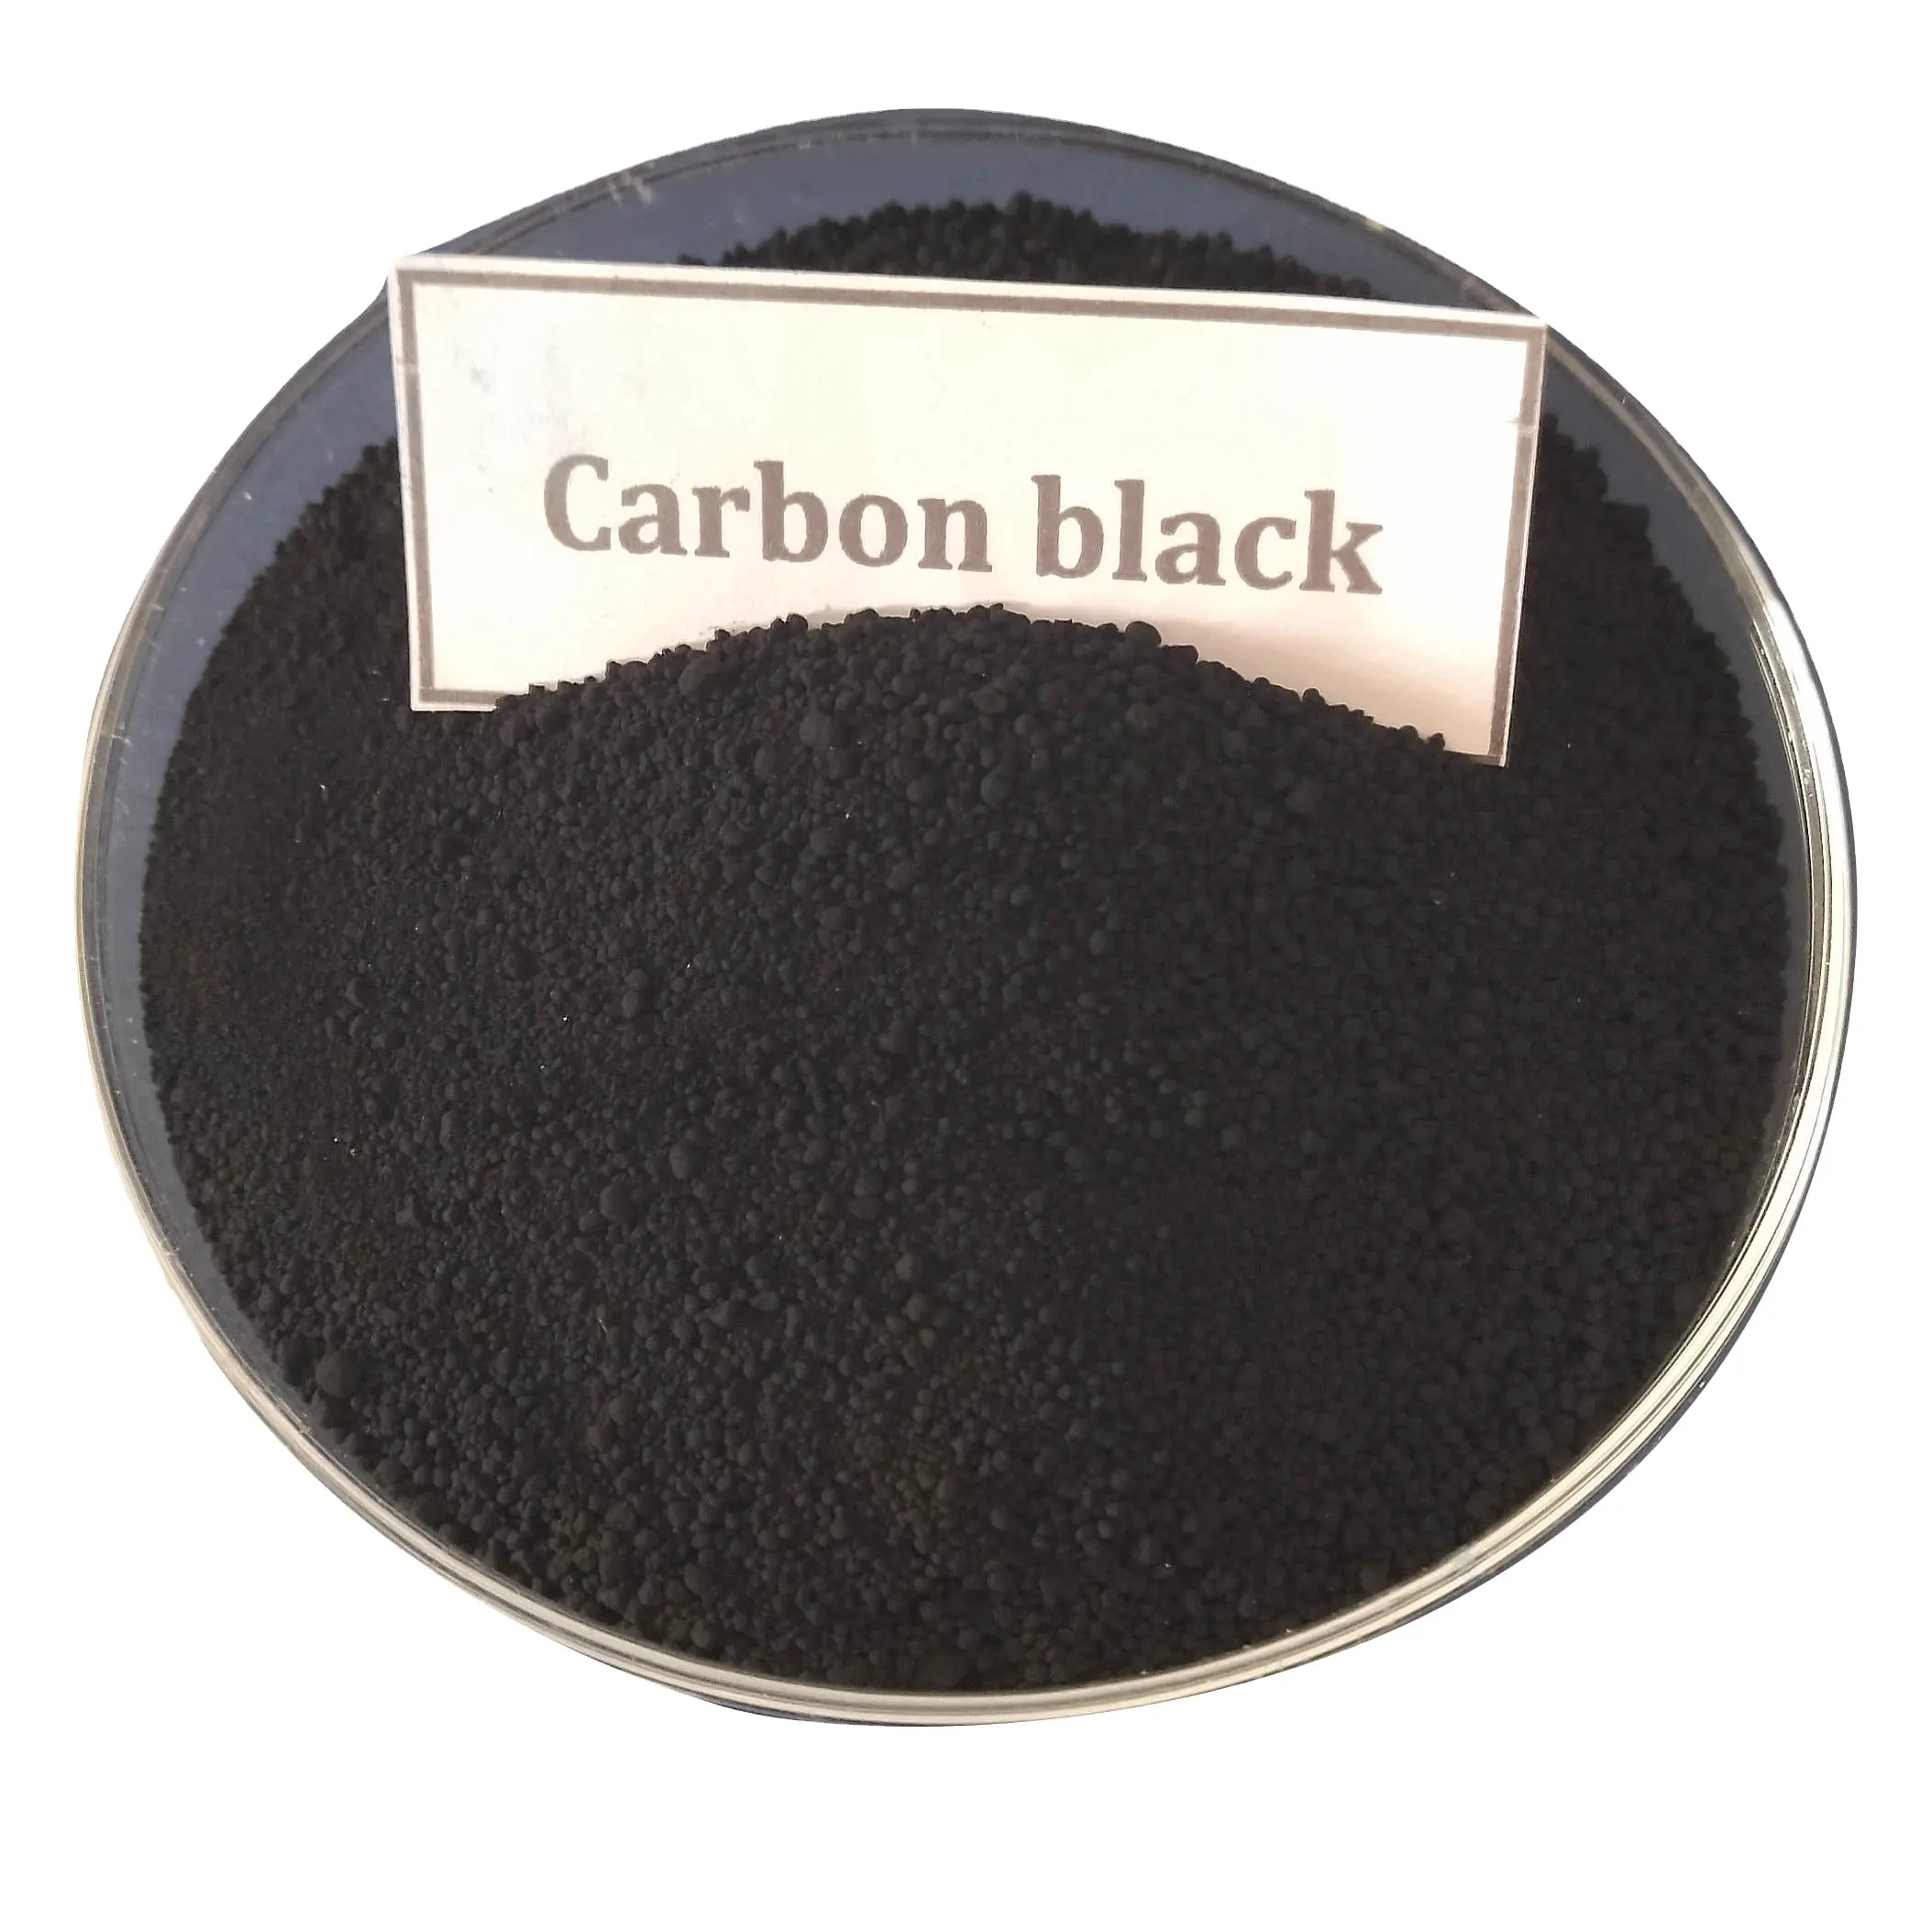 Carbon Black (N550) GPF 660 High Purity Powder Carbon Black na Indústria de Tintas Asahi #95 Borrachas Fabricante, Indústria do Plástico